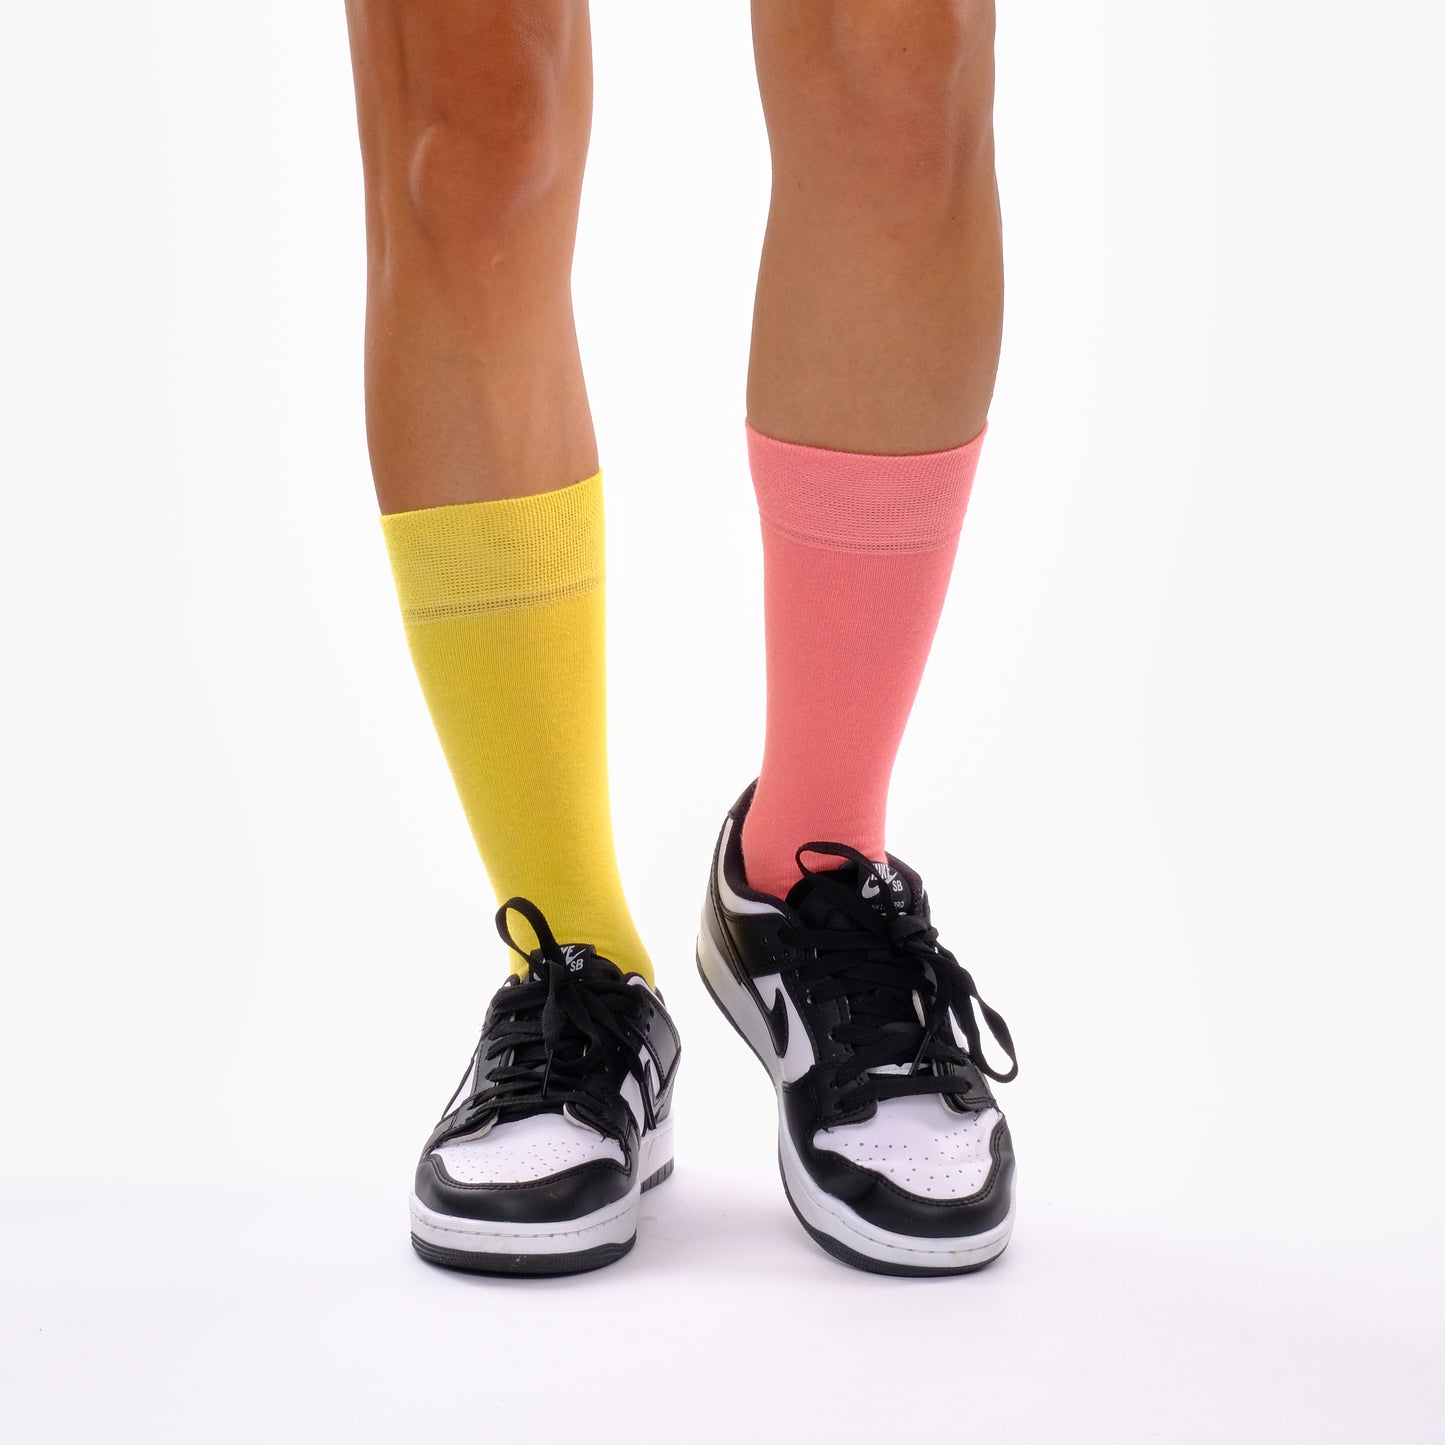 Coral Pink & Yellow Odd Socks